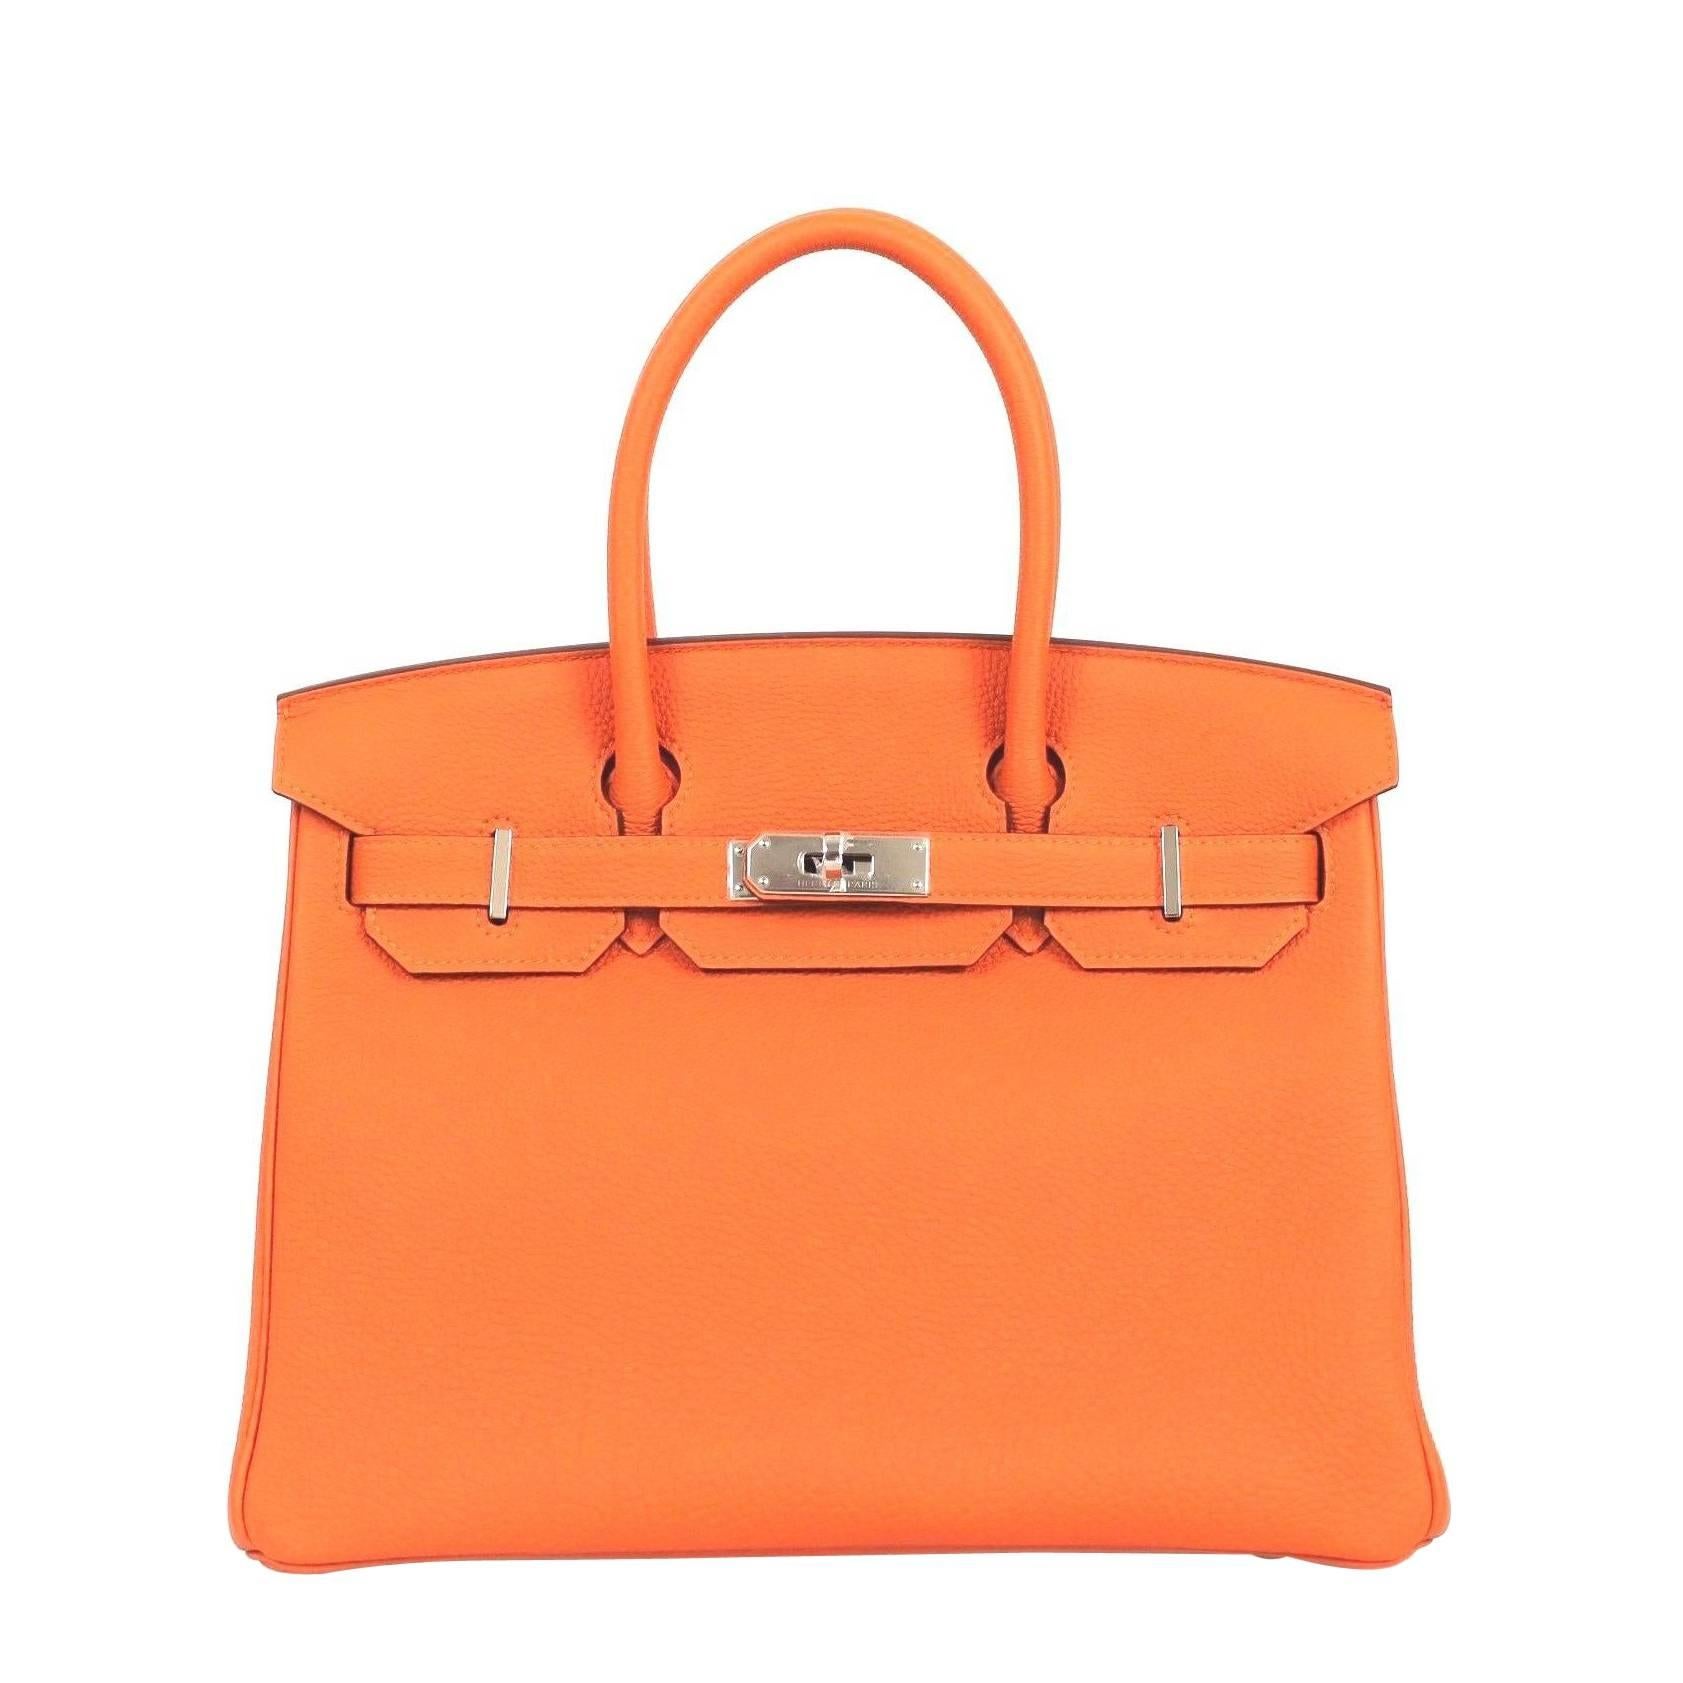 Hermes Togo Leather Silver Hdw 30 Cm Birkin Orange Tote Bag